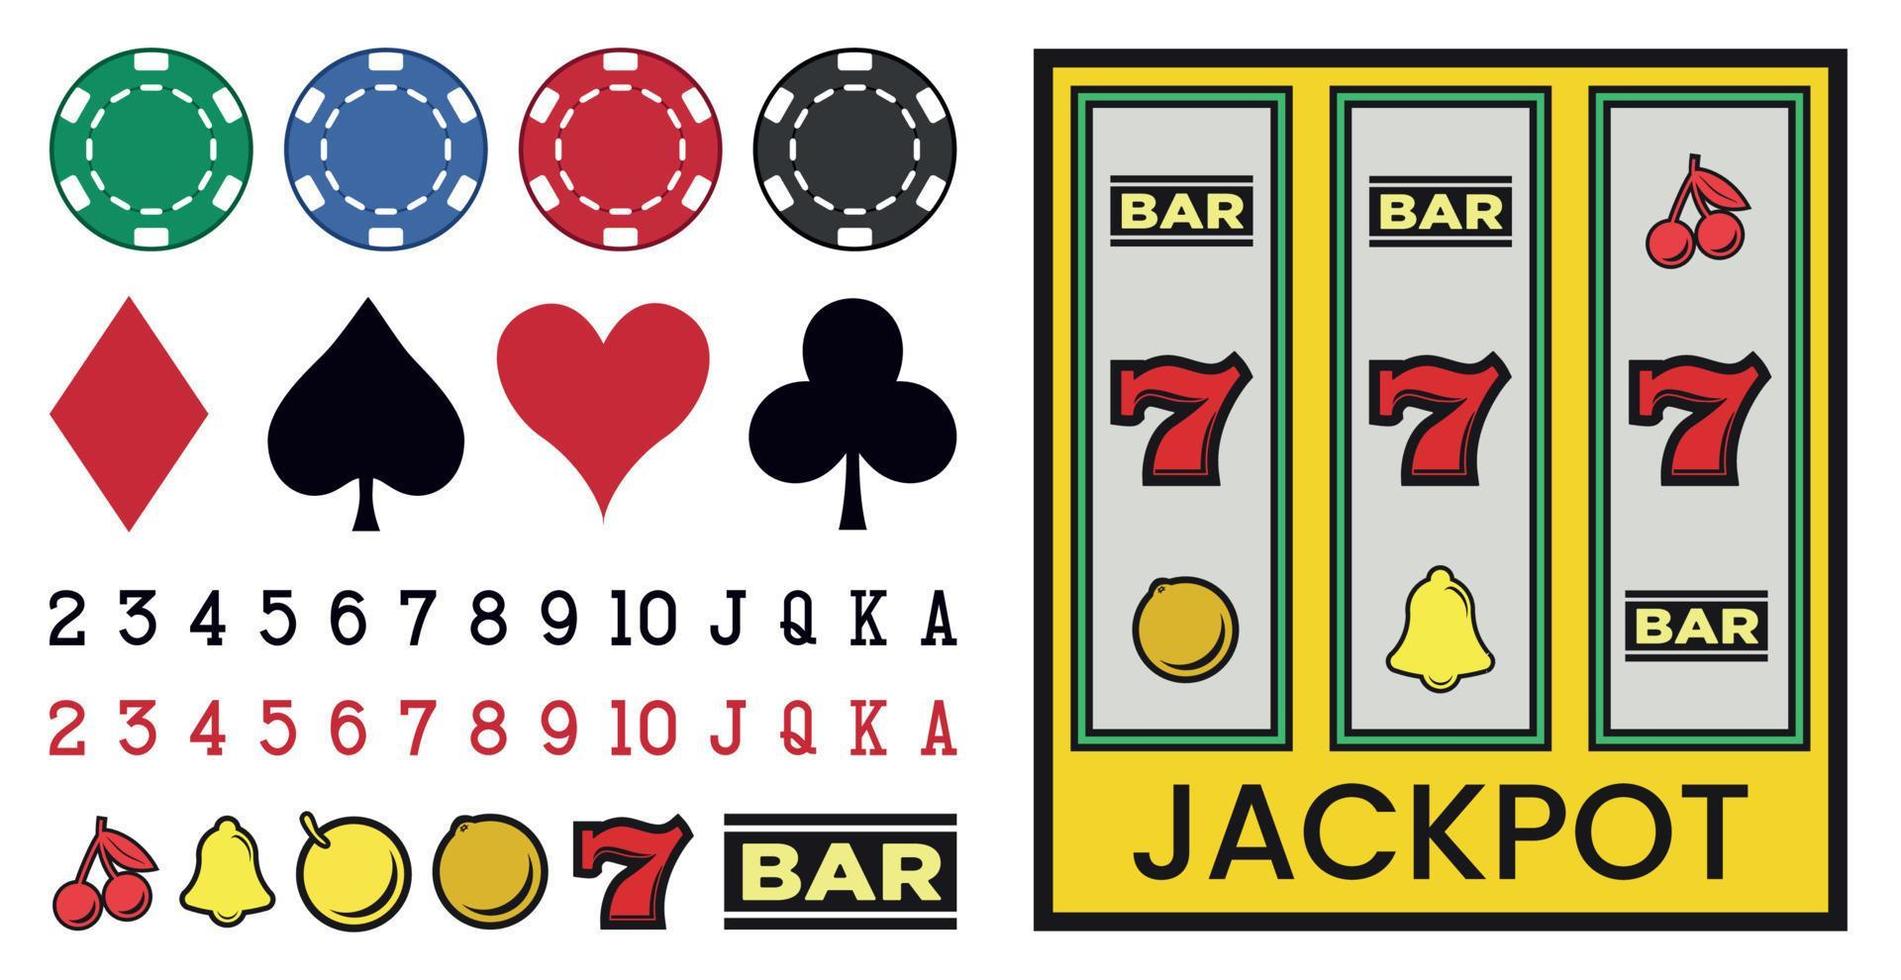 stort kasino set med inslag av poker, spelautomater, tärningar på en vit bakgrund - vektor